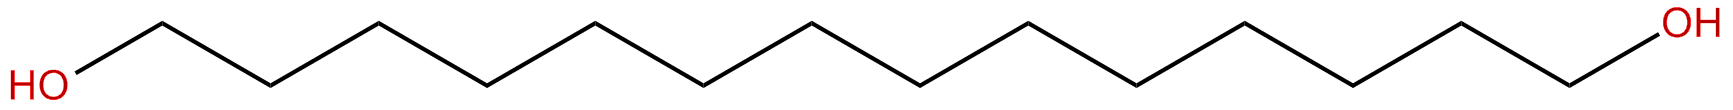 Image of 1,14-tetradecanediol